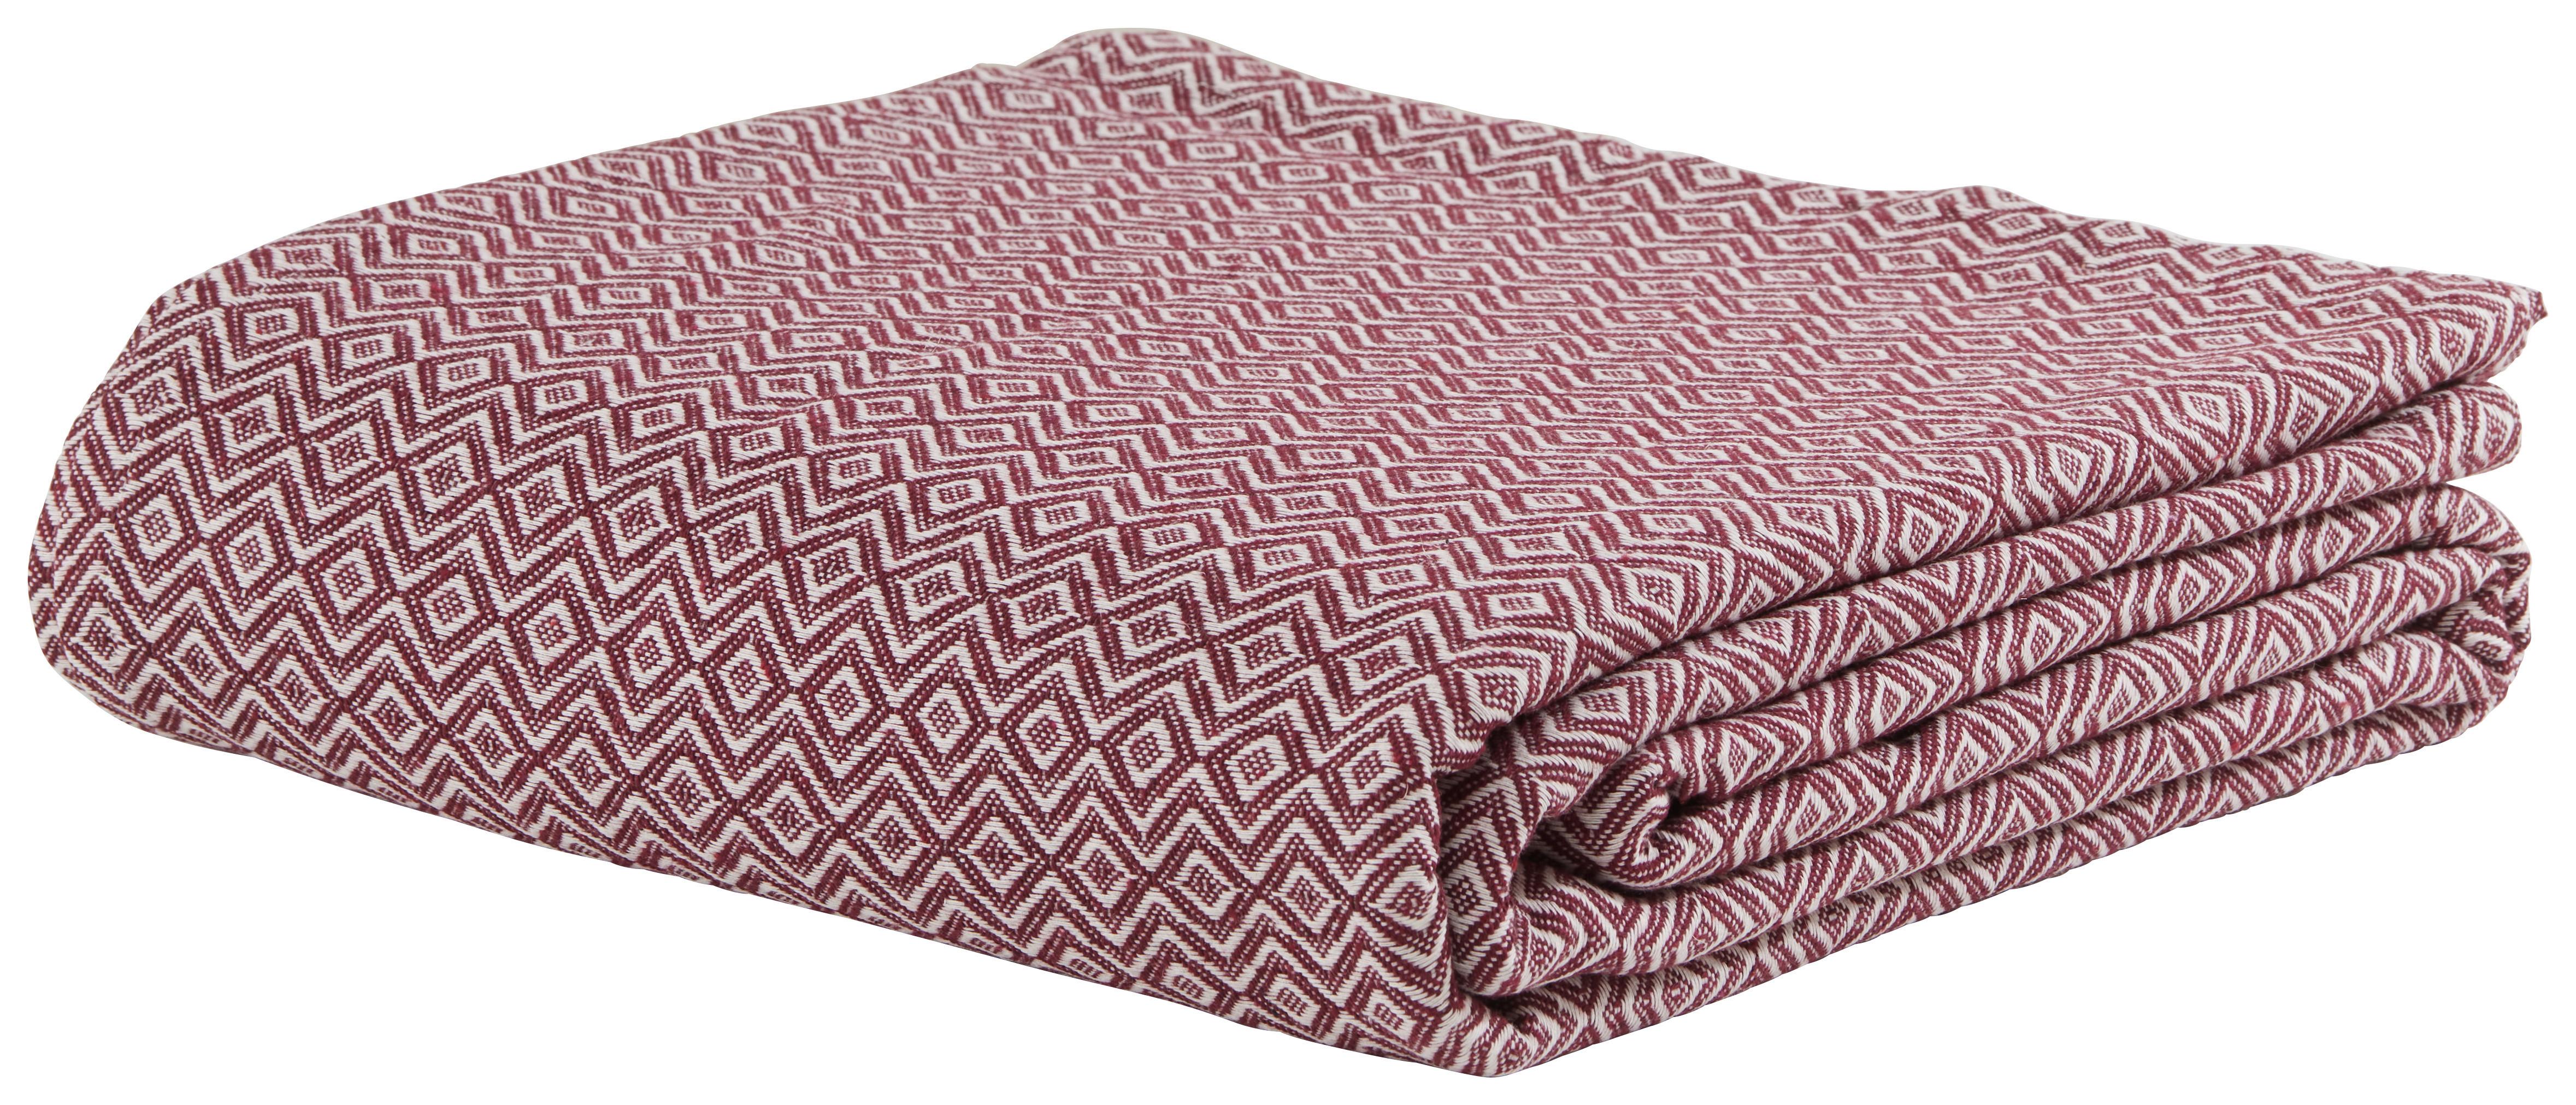 Ágytakaró Dobby Raute - Piros/Fehér, Textil (140/210cm) - Premium Living